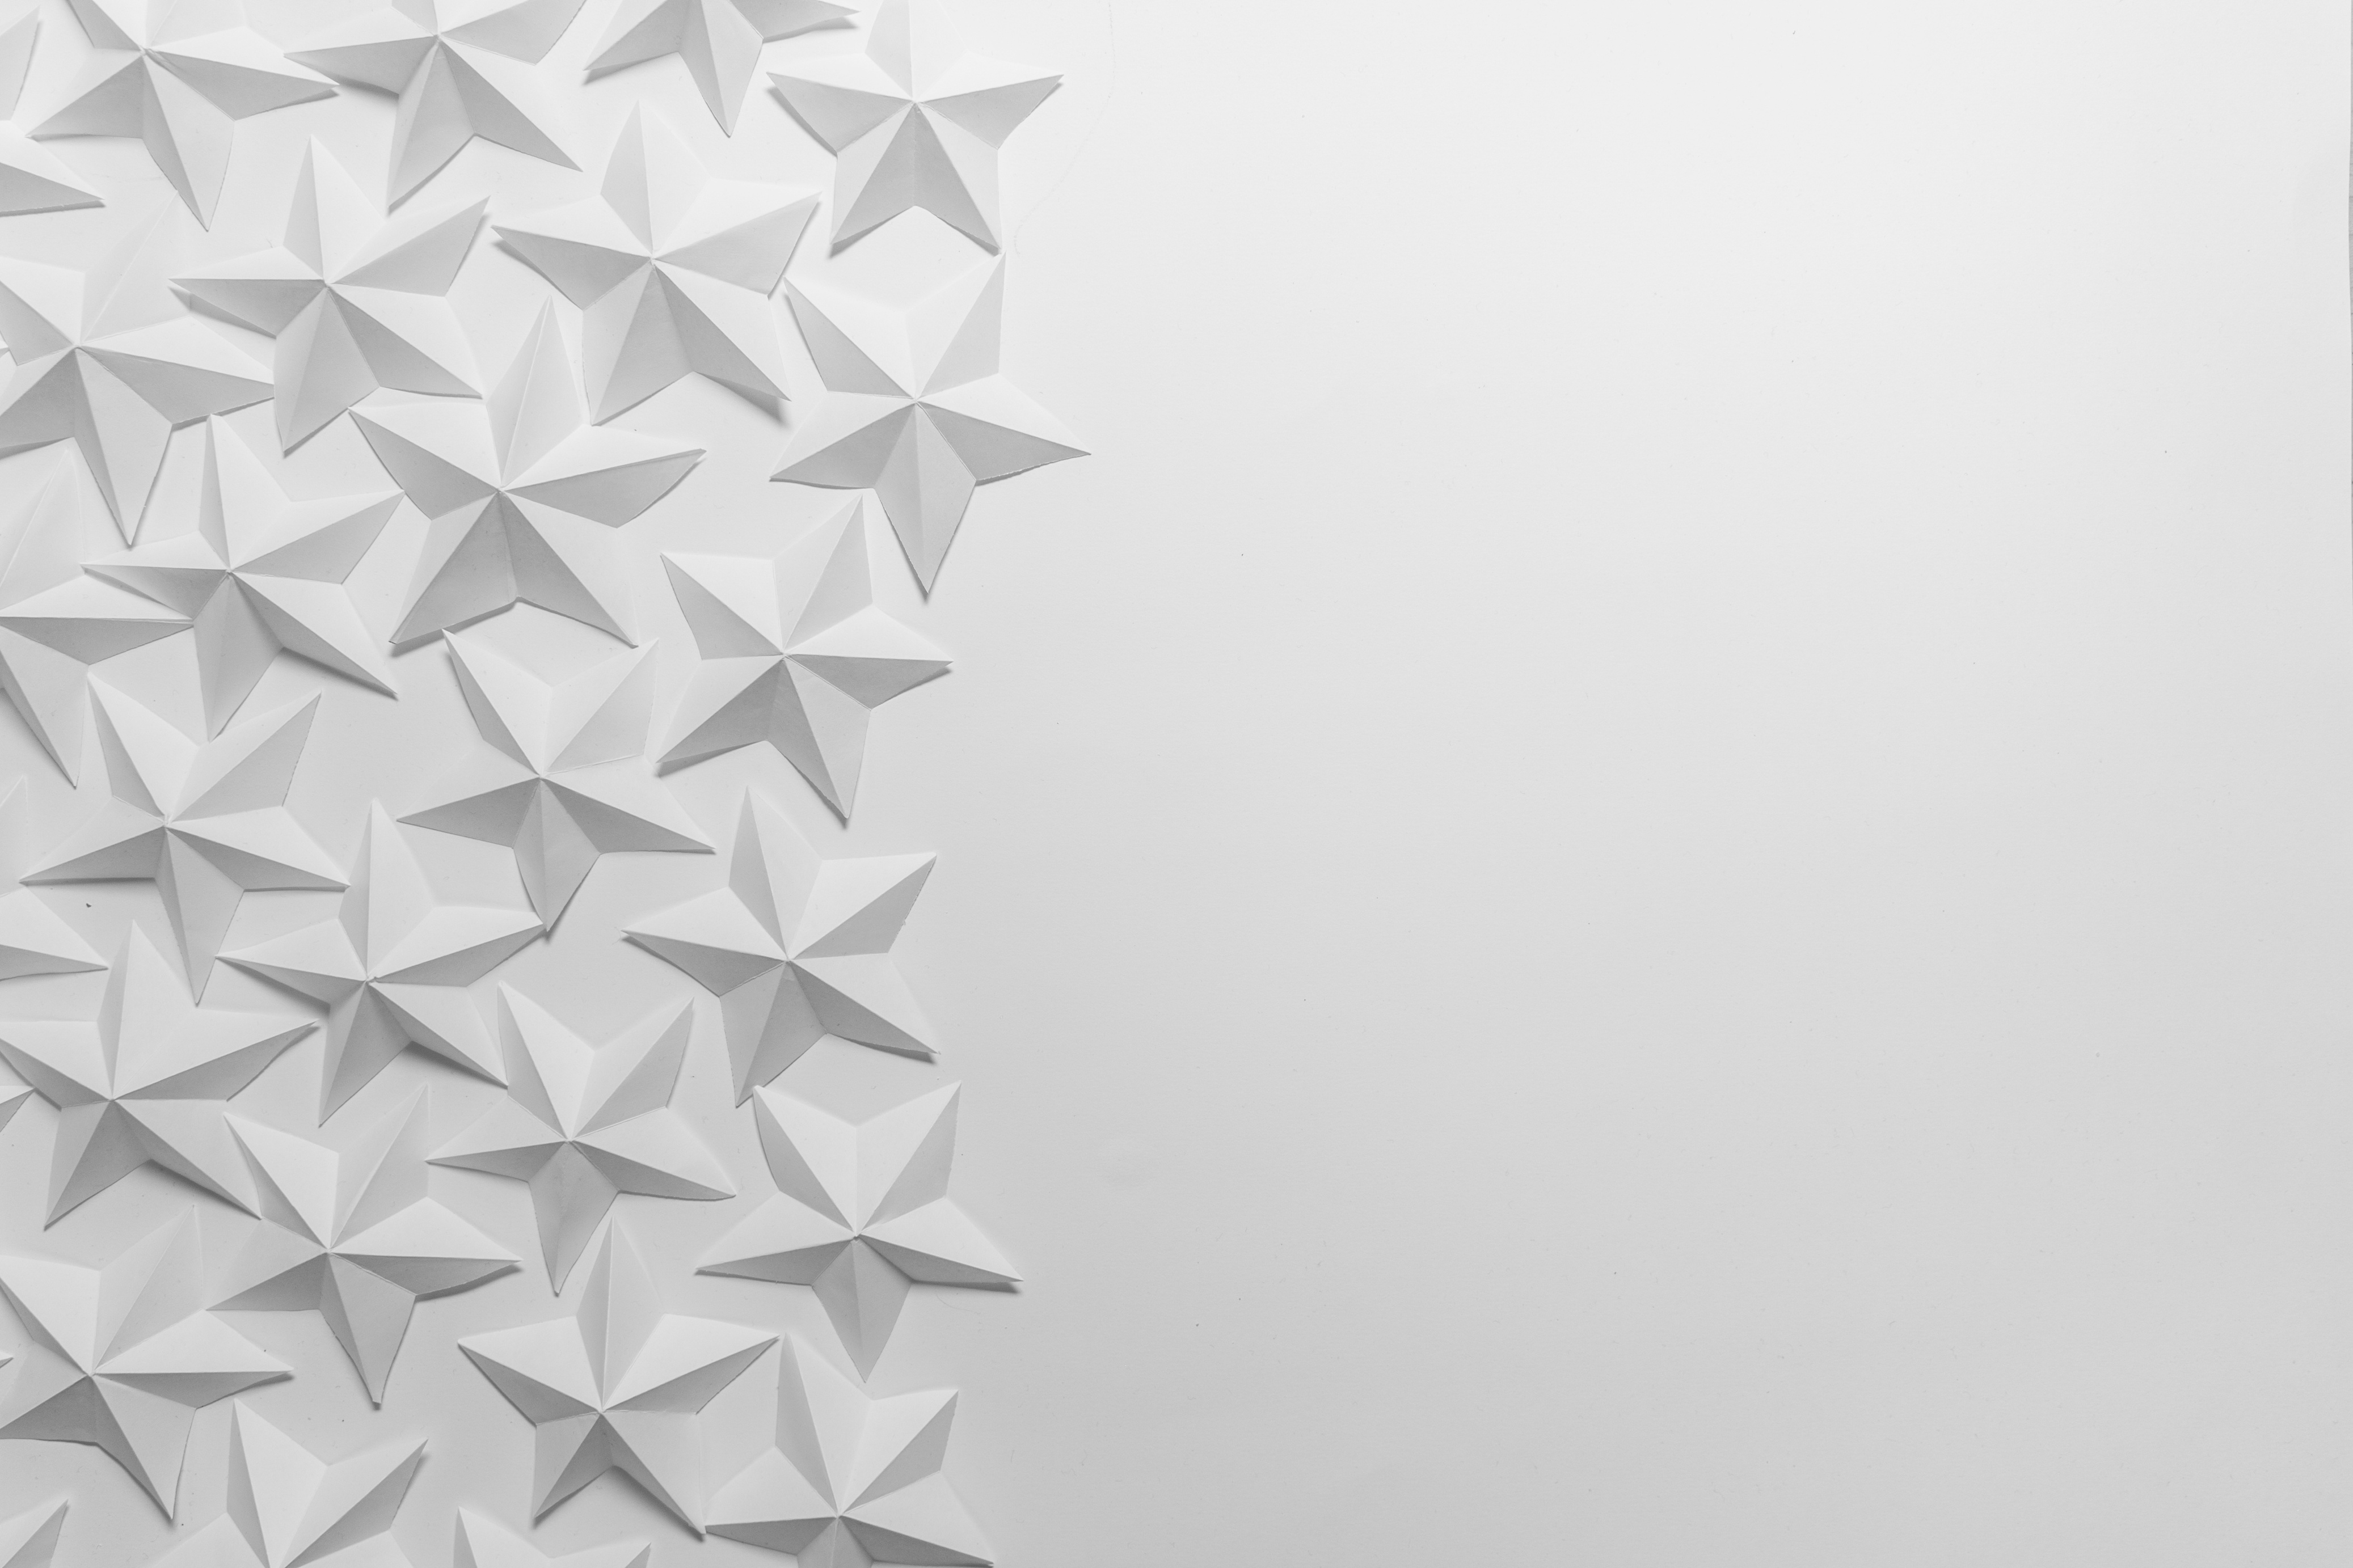 Folded white origami stars